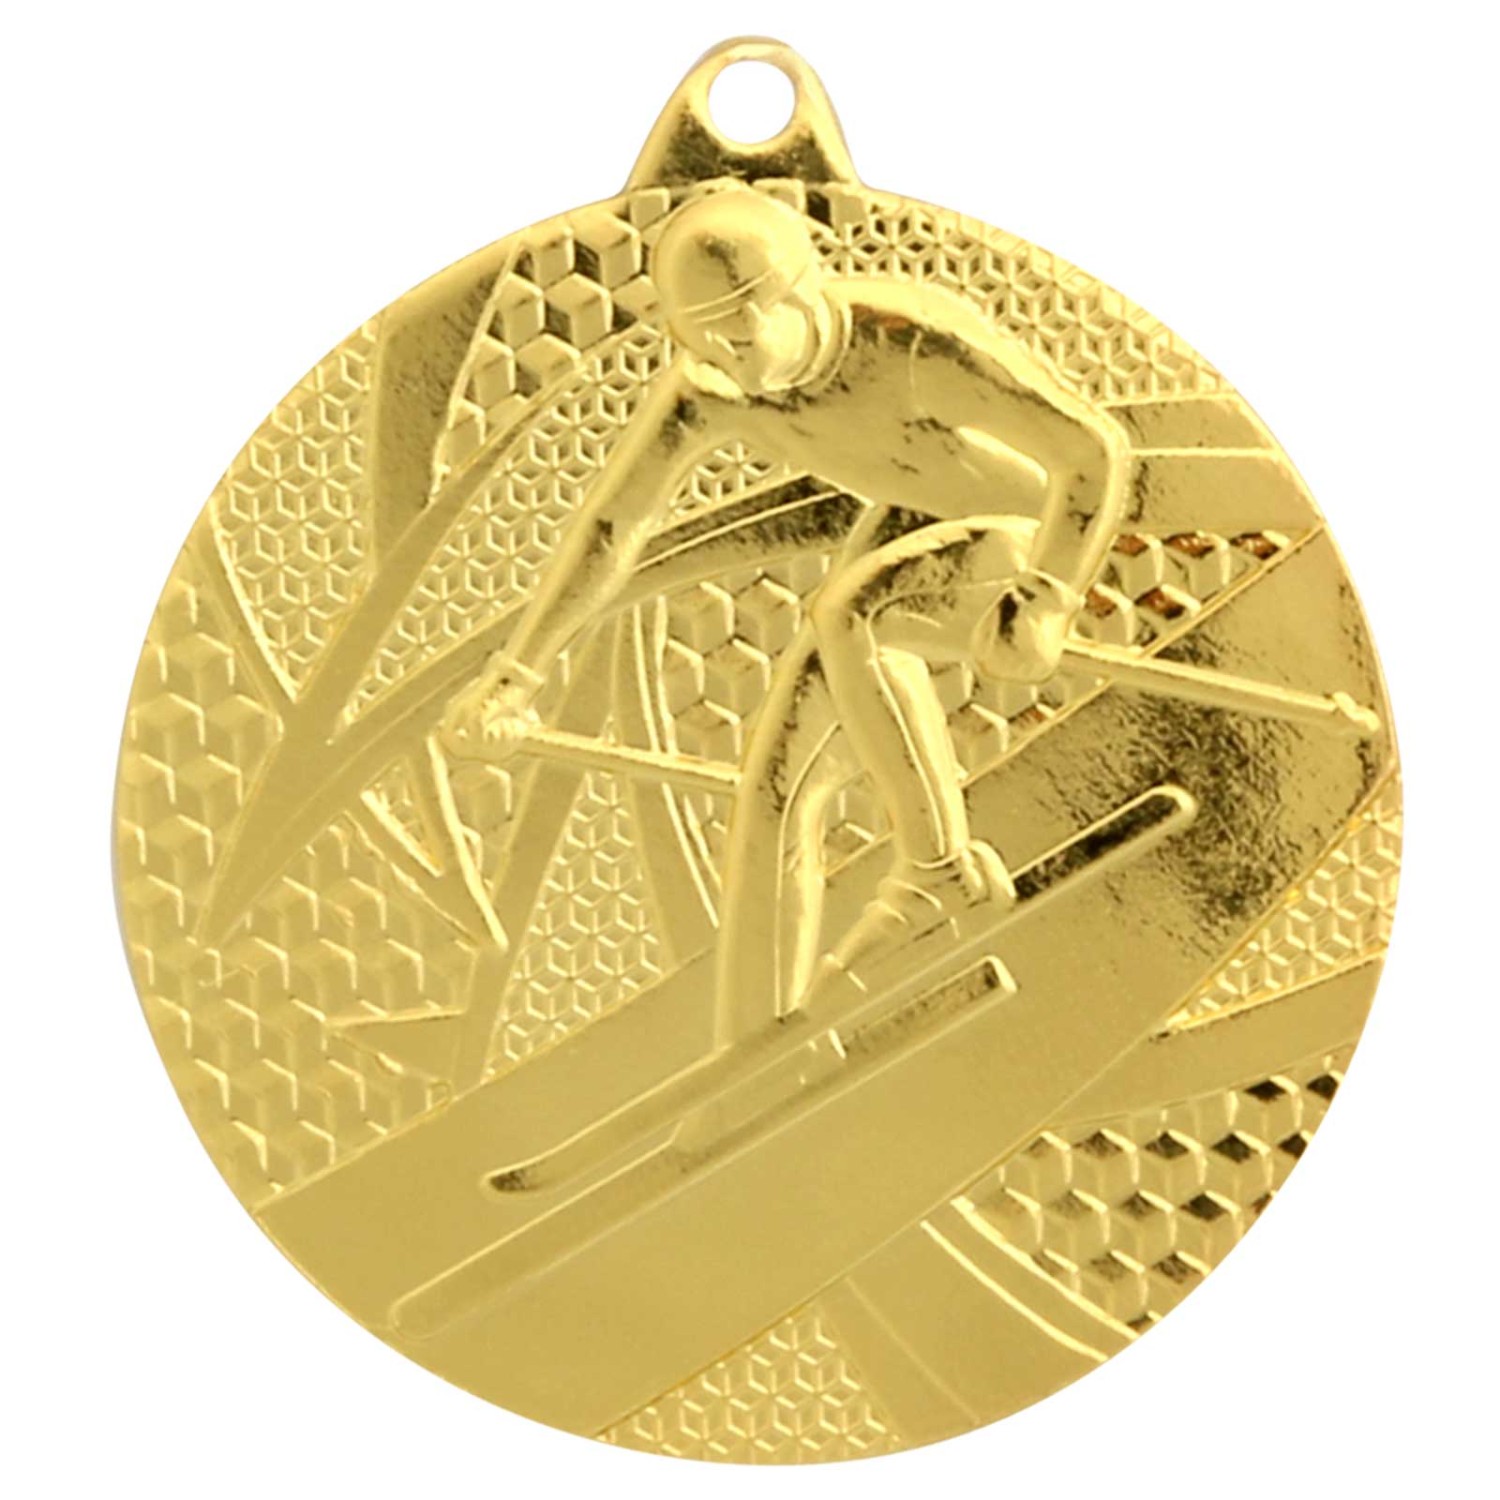 1. Foto Medaille Ski Wintersport Abfahrt gold silber bronze 50 mm Stahl (Sorte: Set je 1x gold / silber / bronze)